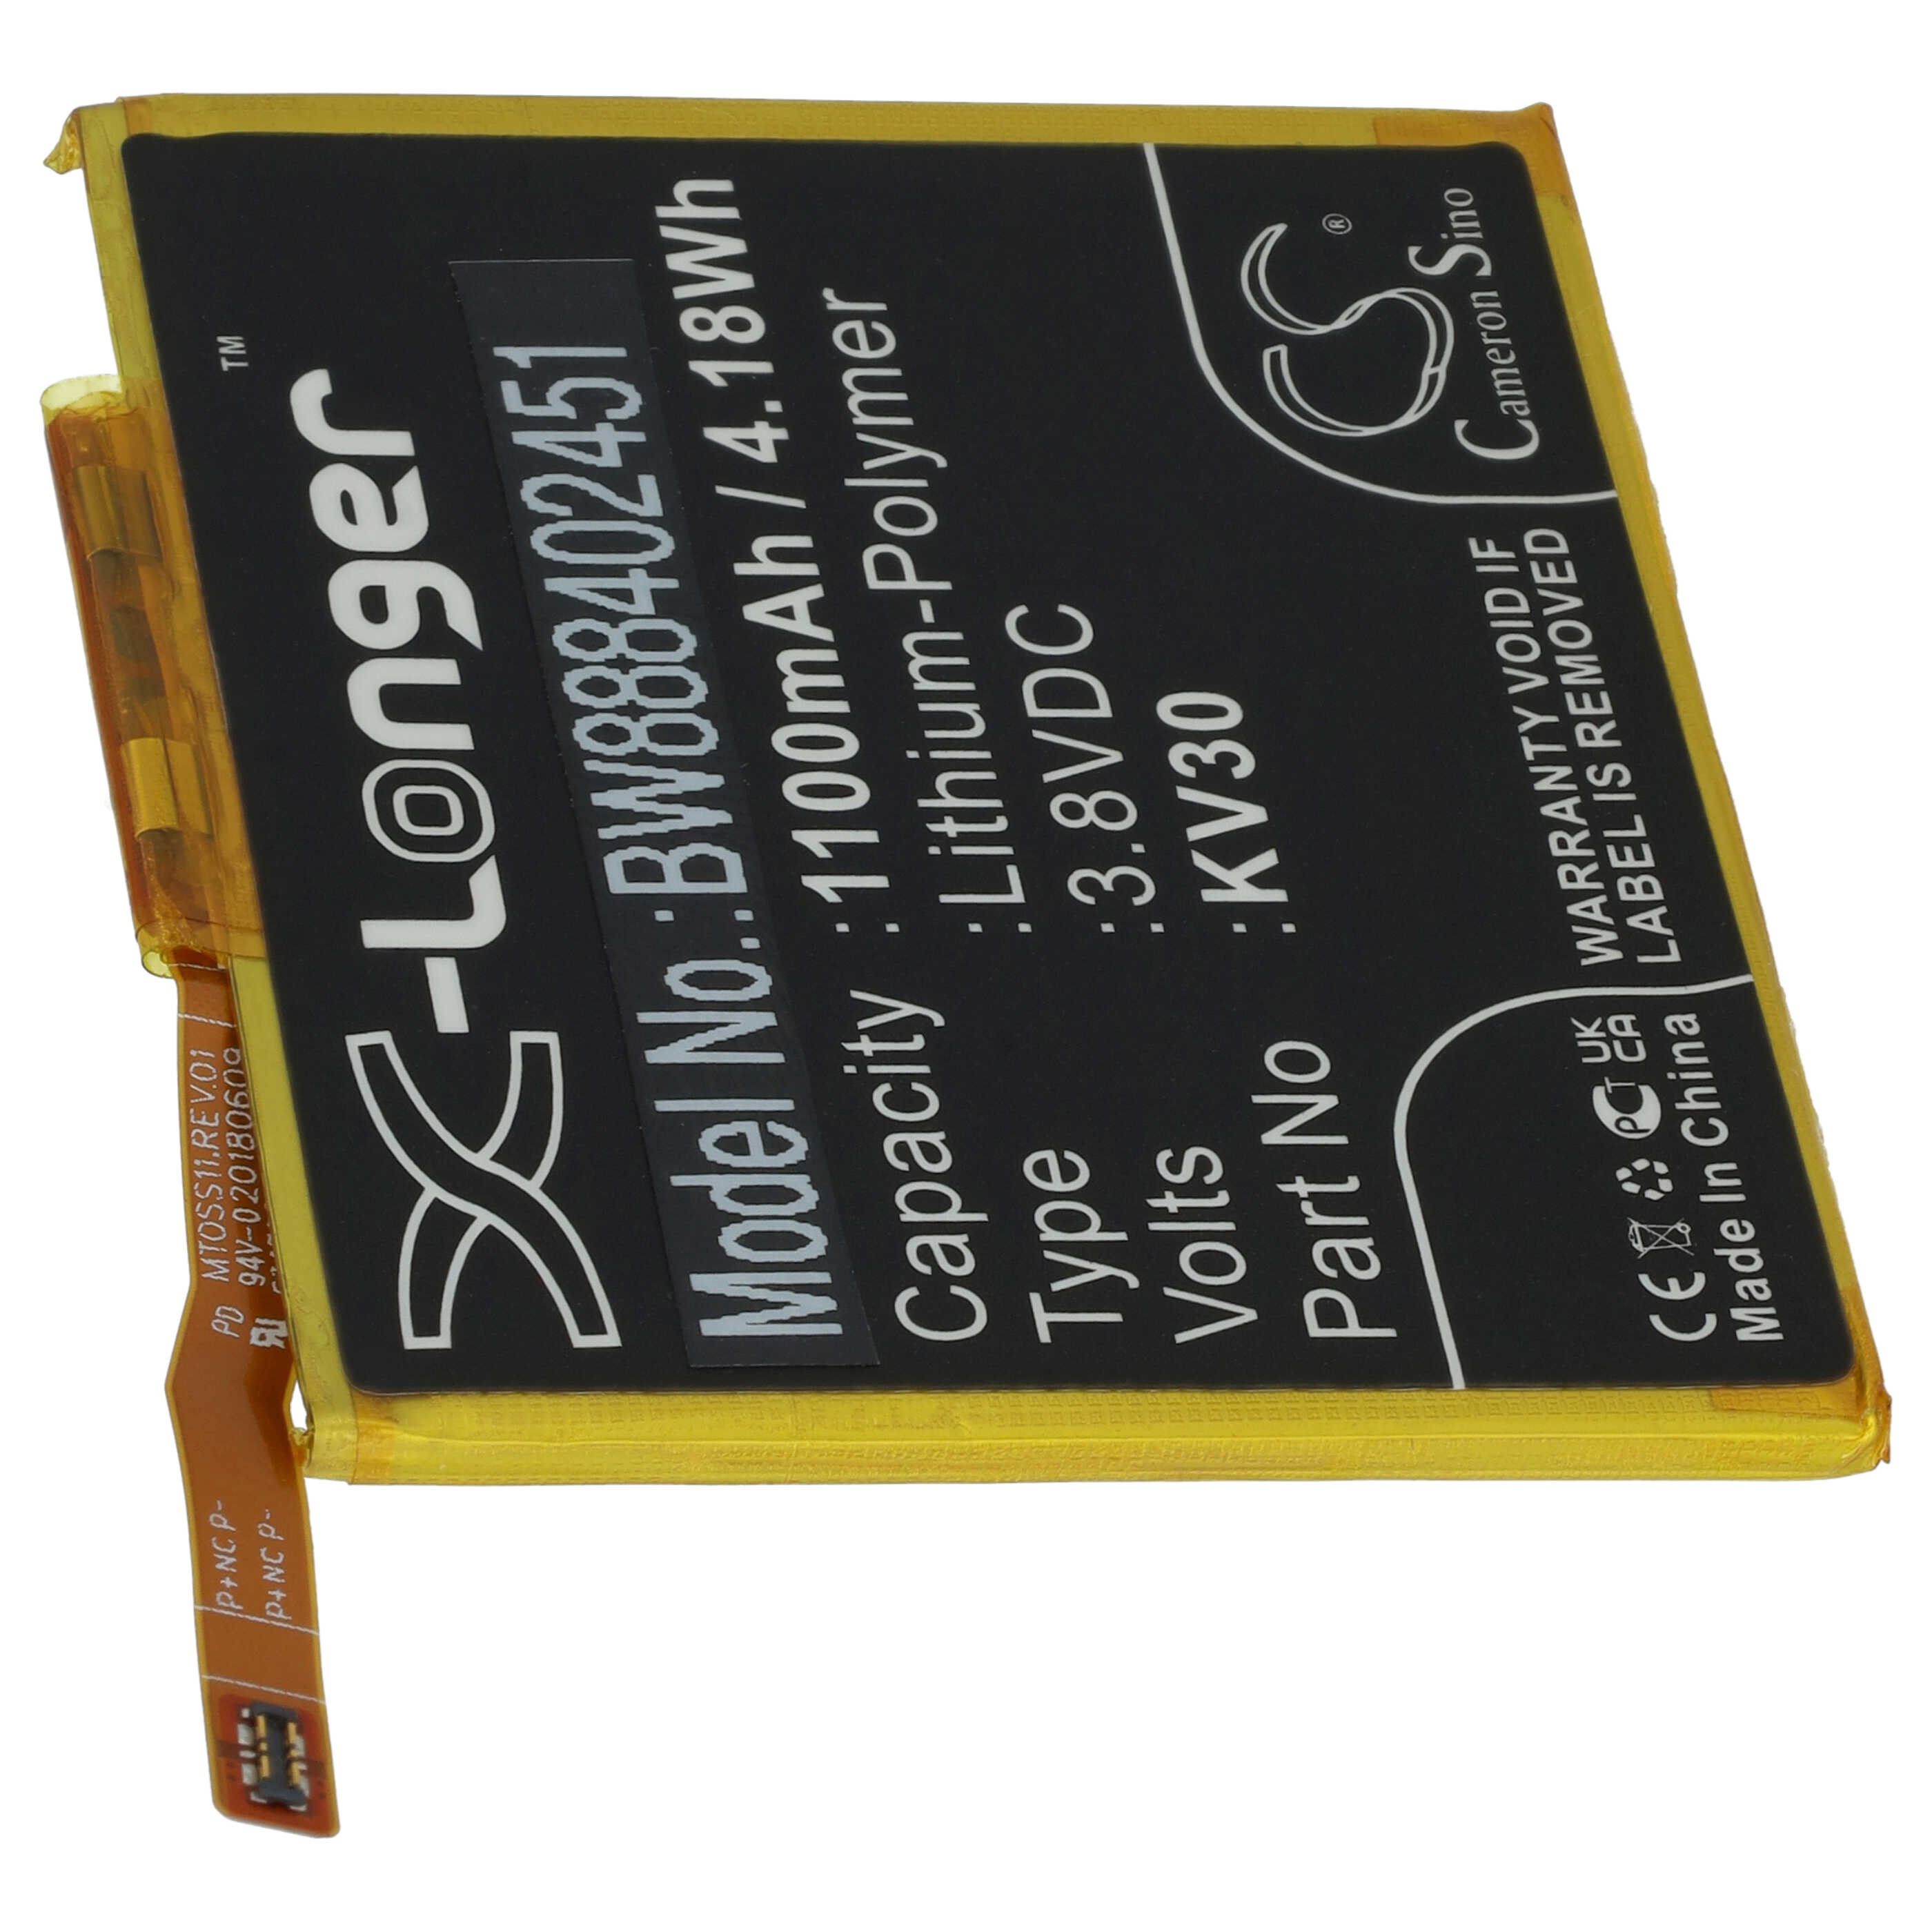 Akumulator bateria do telefonu smartfona zam. Motorola KV30, SB18C40007 - 1100mAh, 3,8V, LiPo